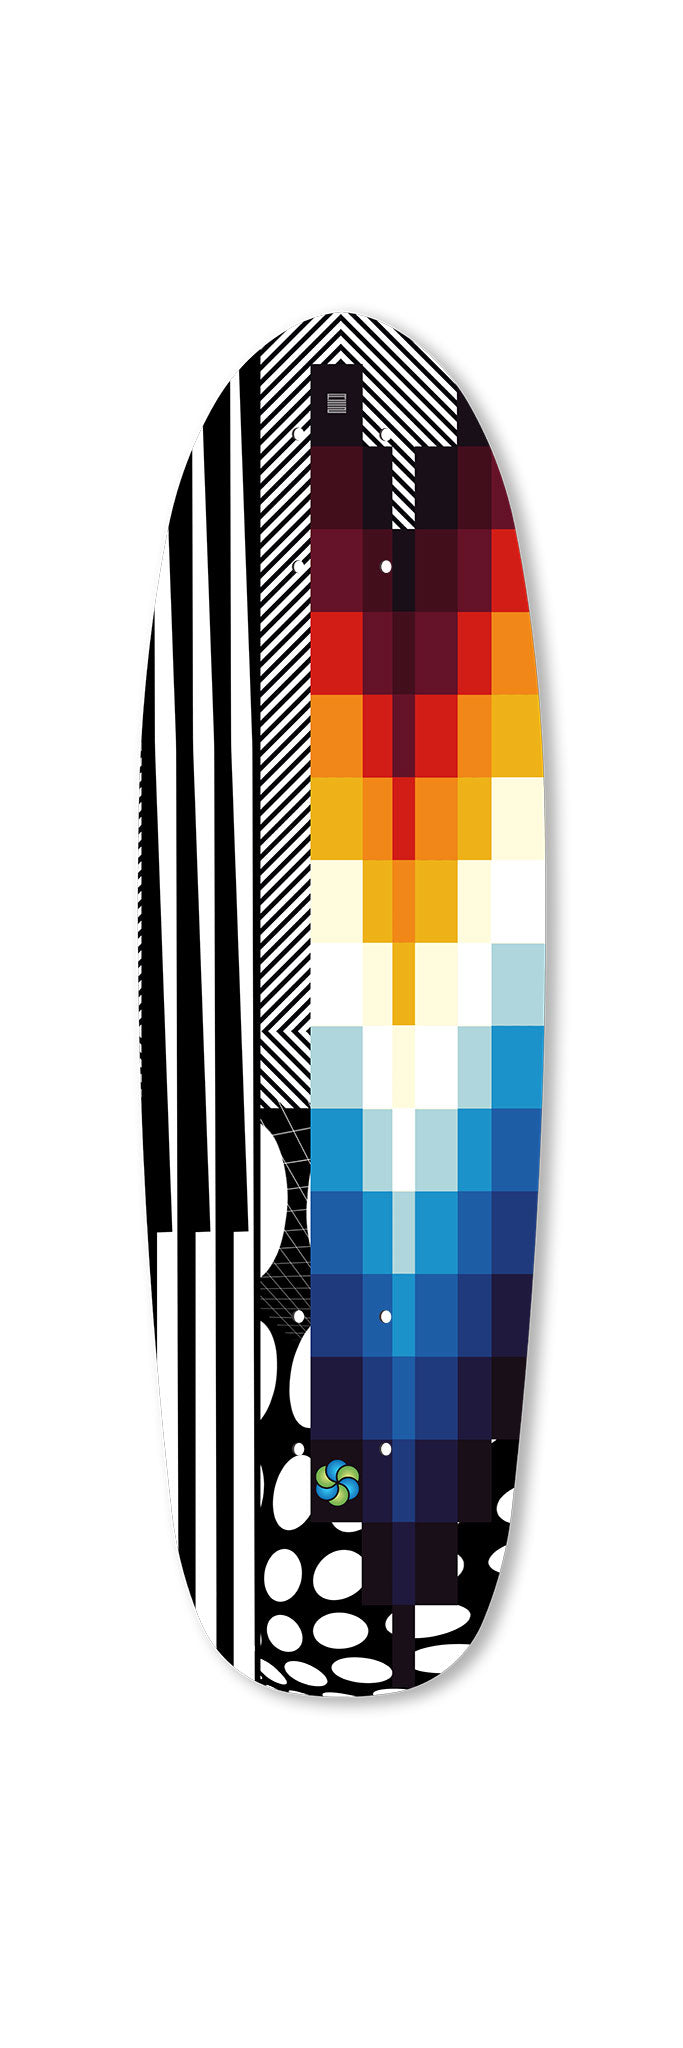 Psychromie Mini 670 art on skateboards frontside. Limited edition by Afshin Le Bon Etesamifar